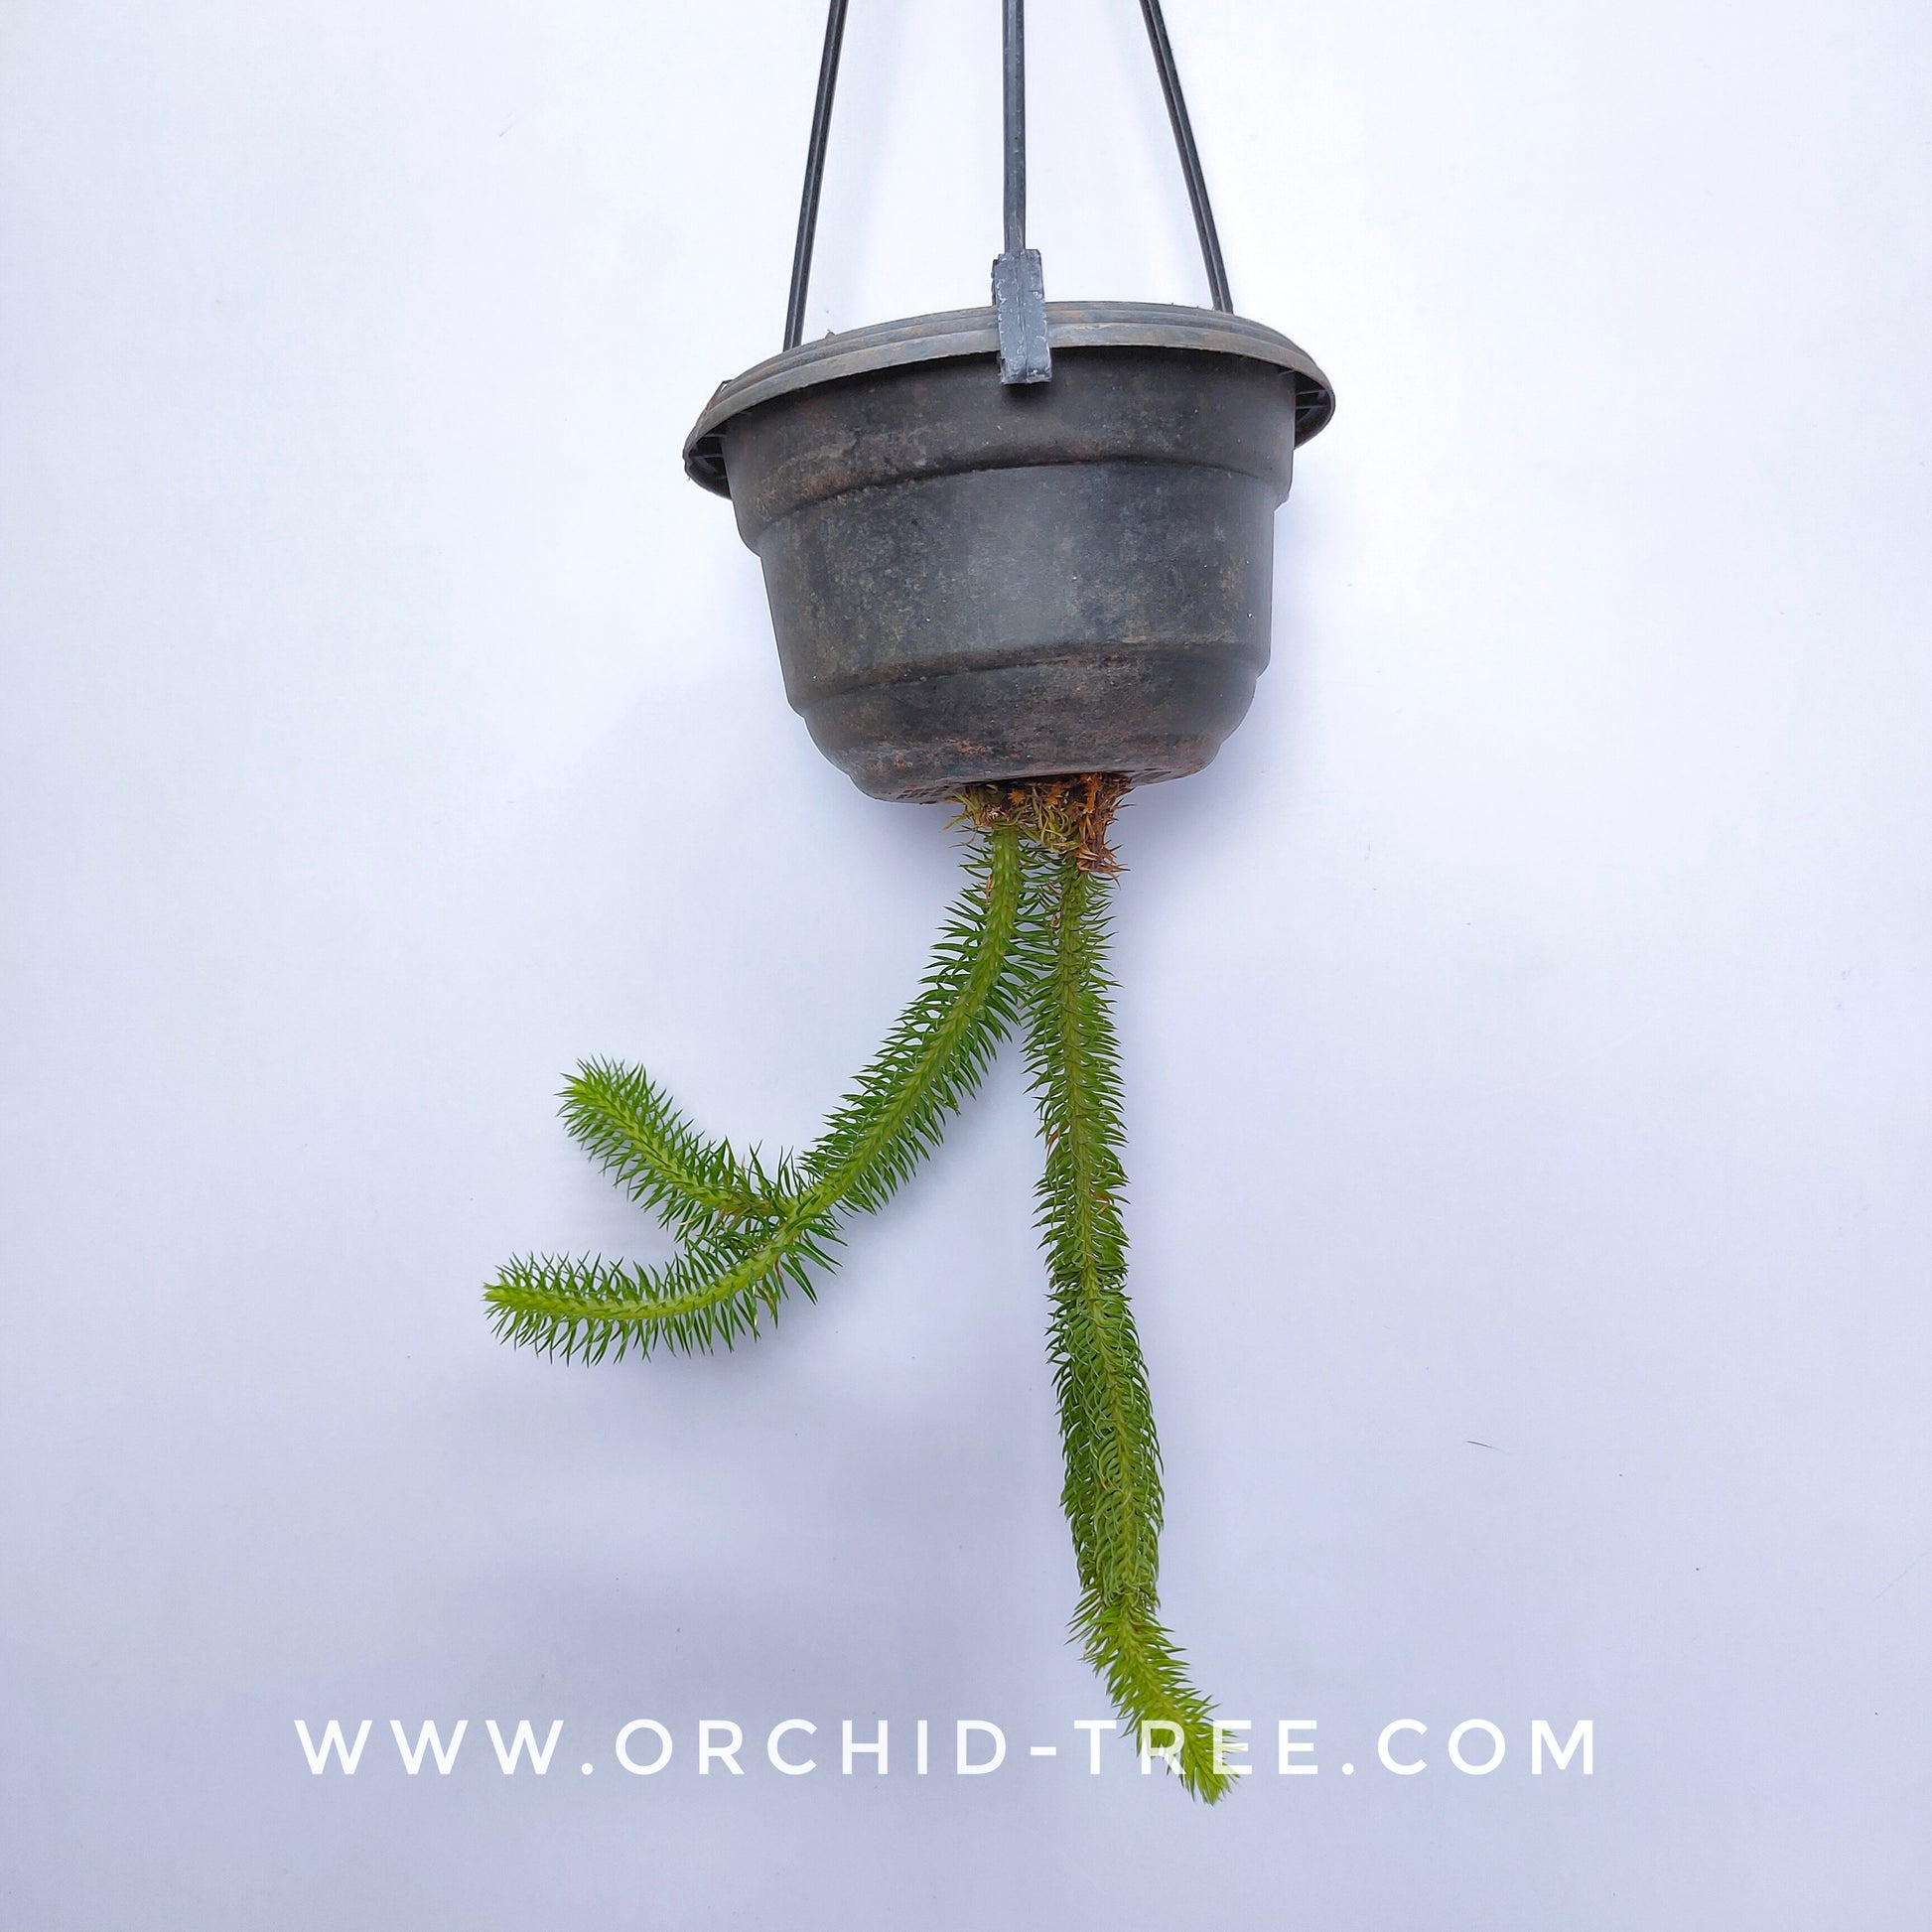 Lycopodium | Rock Tassel Fern - Buy Orchids Plants Online by Orchid-Tree.com